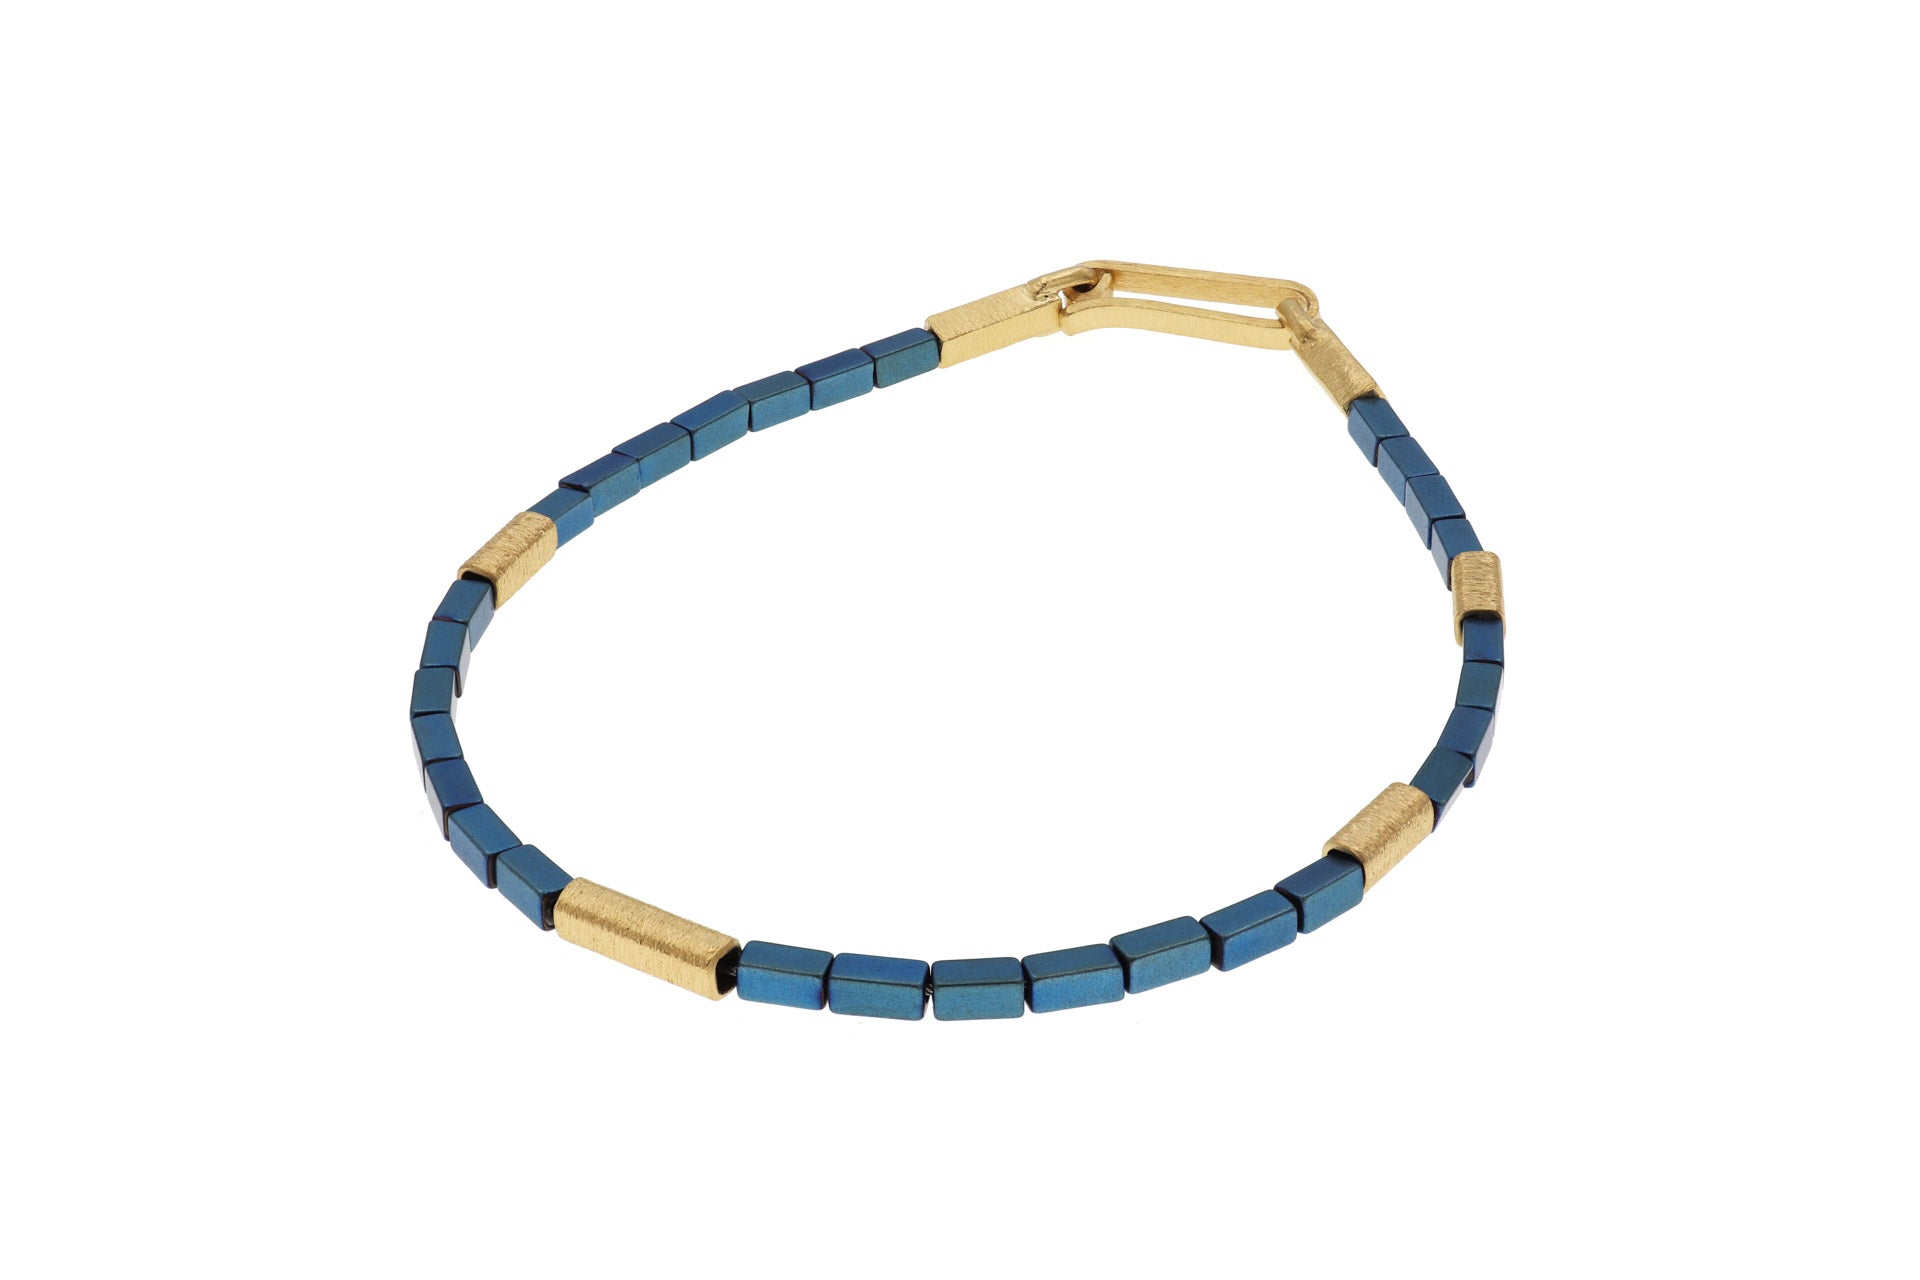 Gold & Blue Hematite Bracelet - The Nancy Smillie Shop - Art, Jewellery & Designer Gifts Glasgow